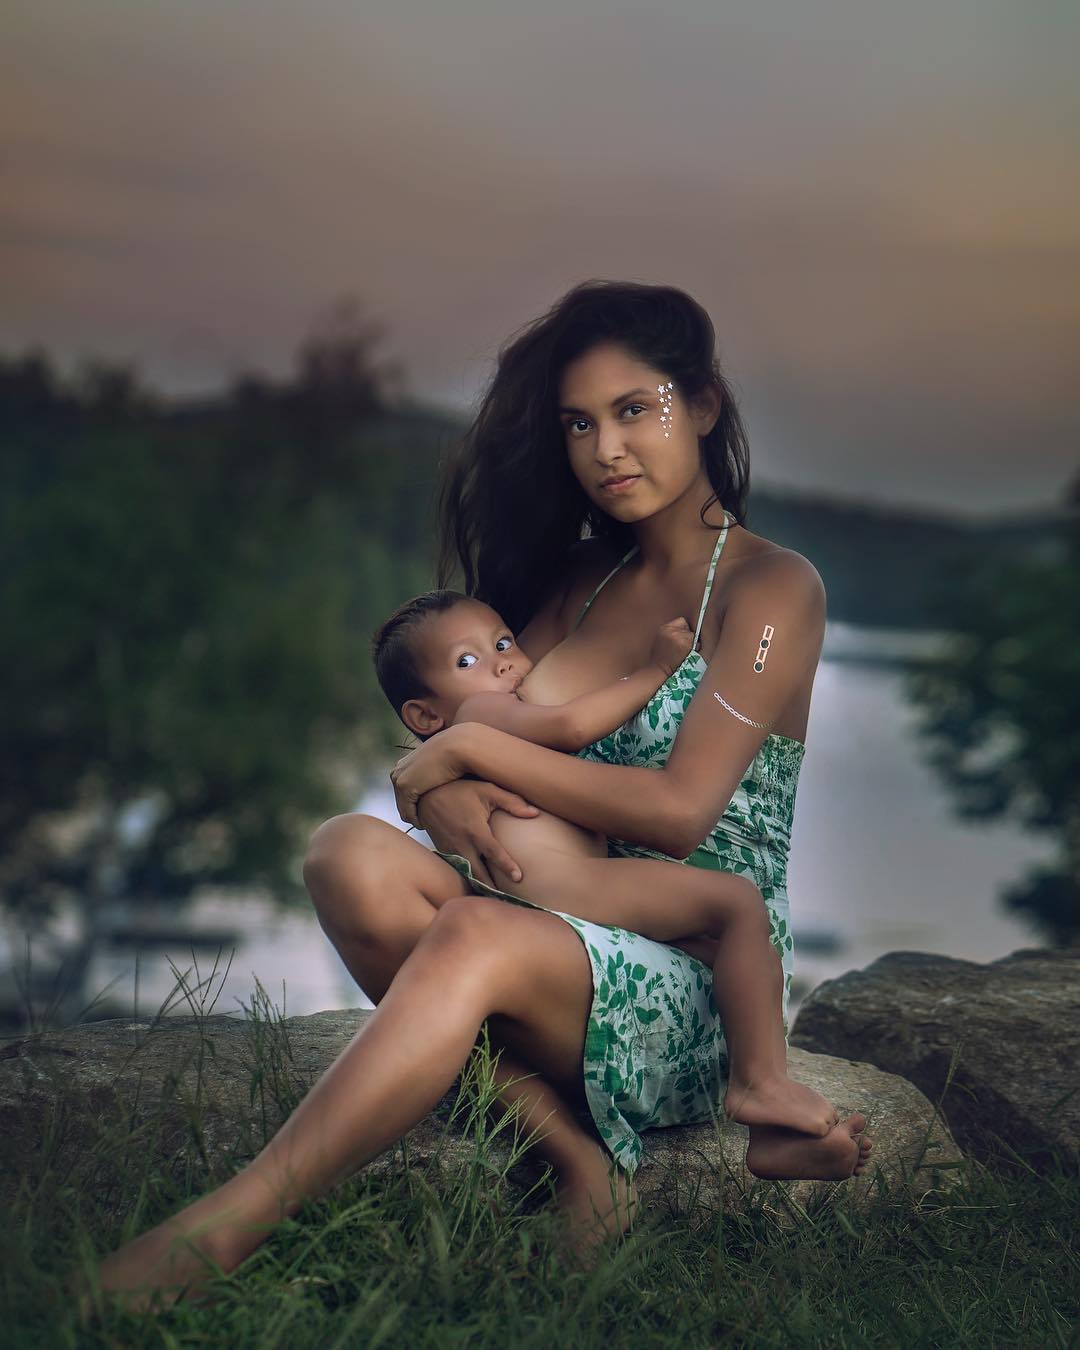 голая женщина с ребенком фото и видео фото 41